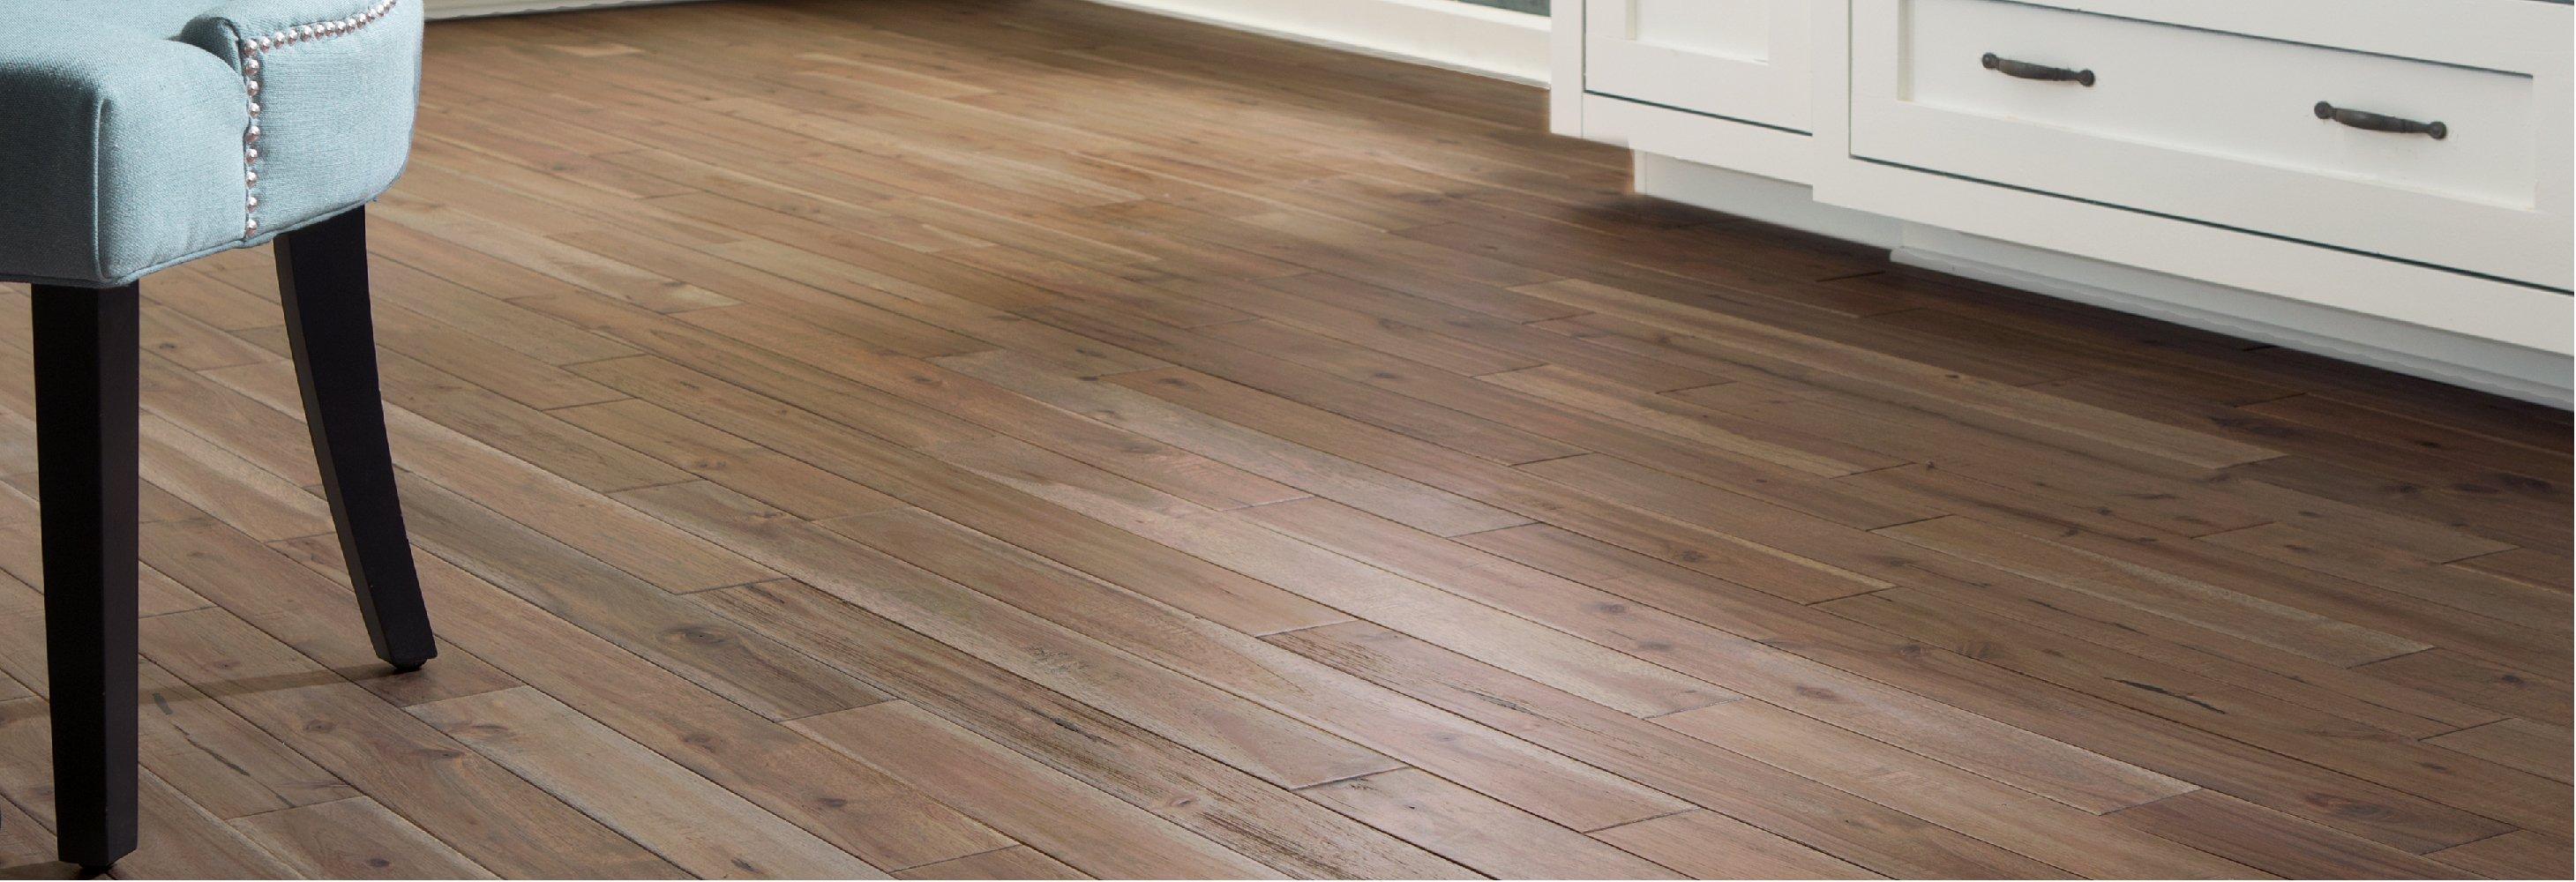 solid hardwood flooring BPBLRUA